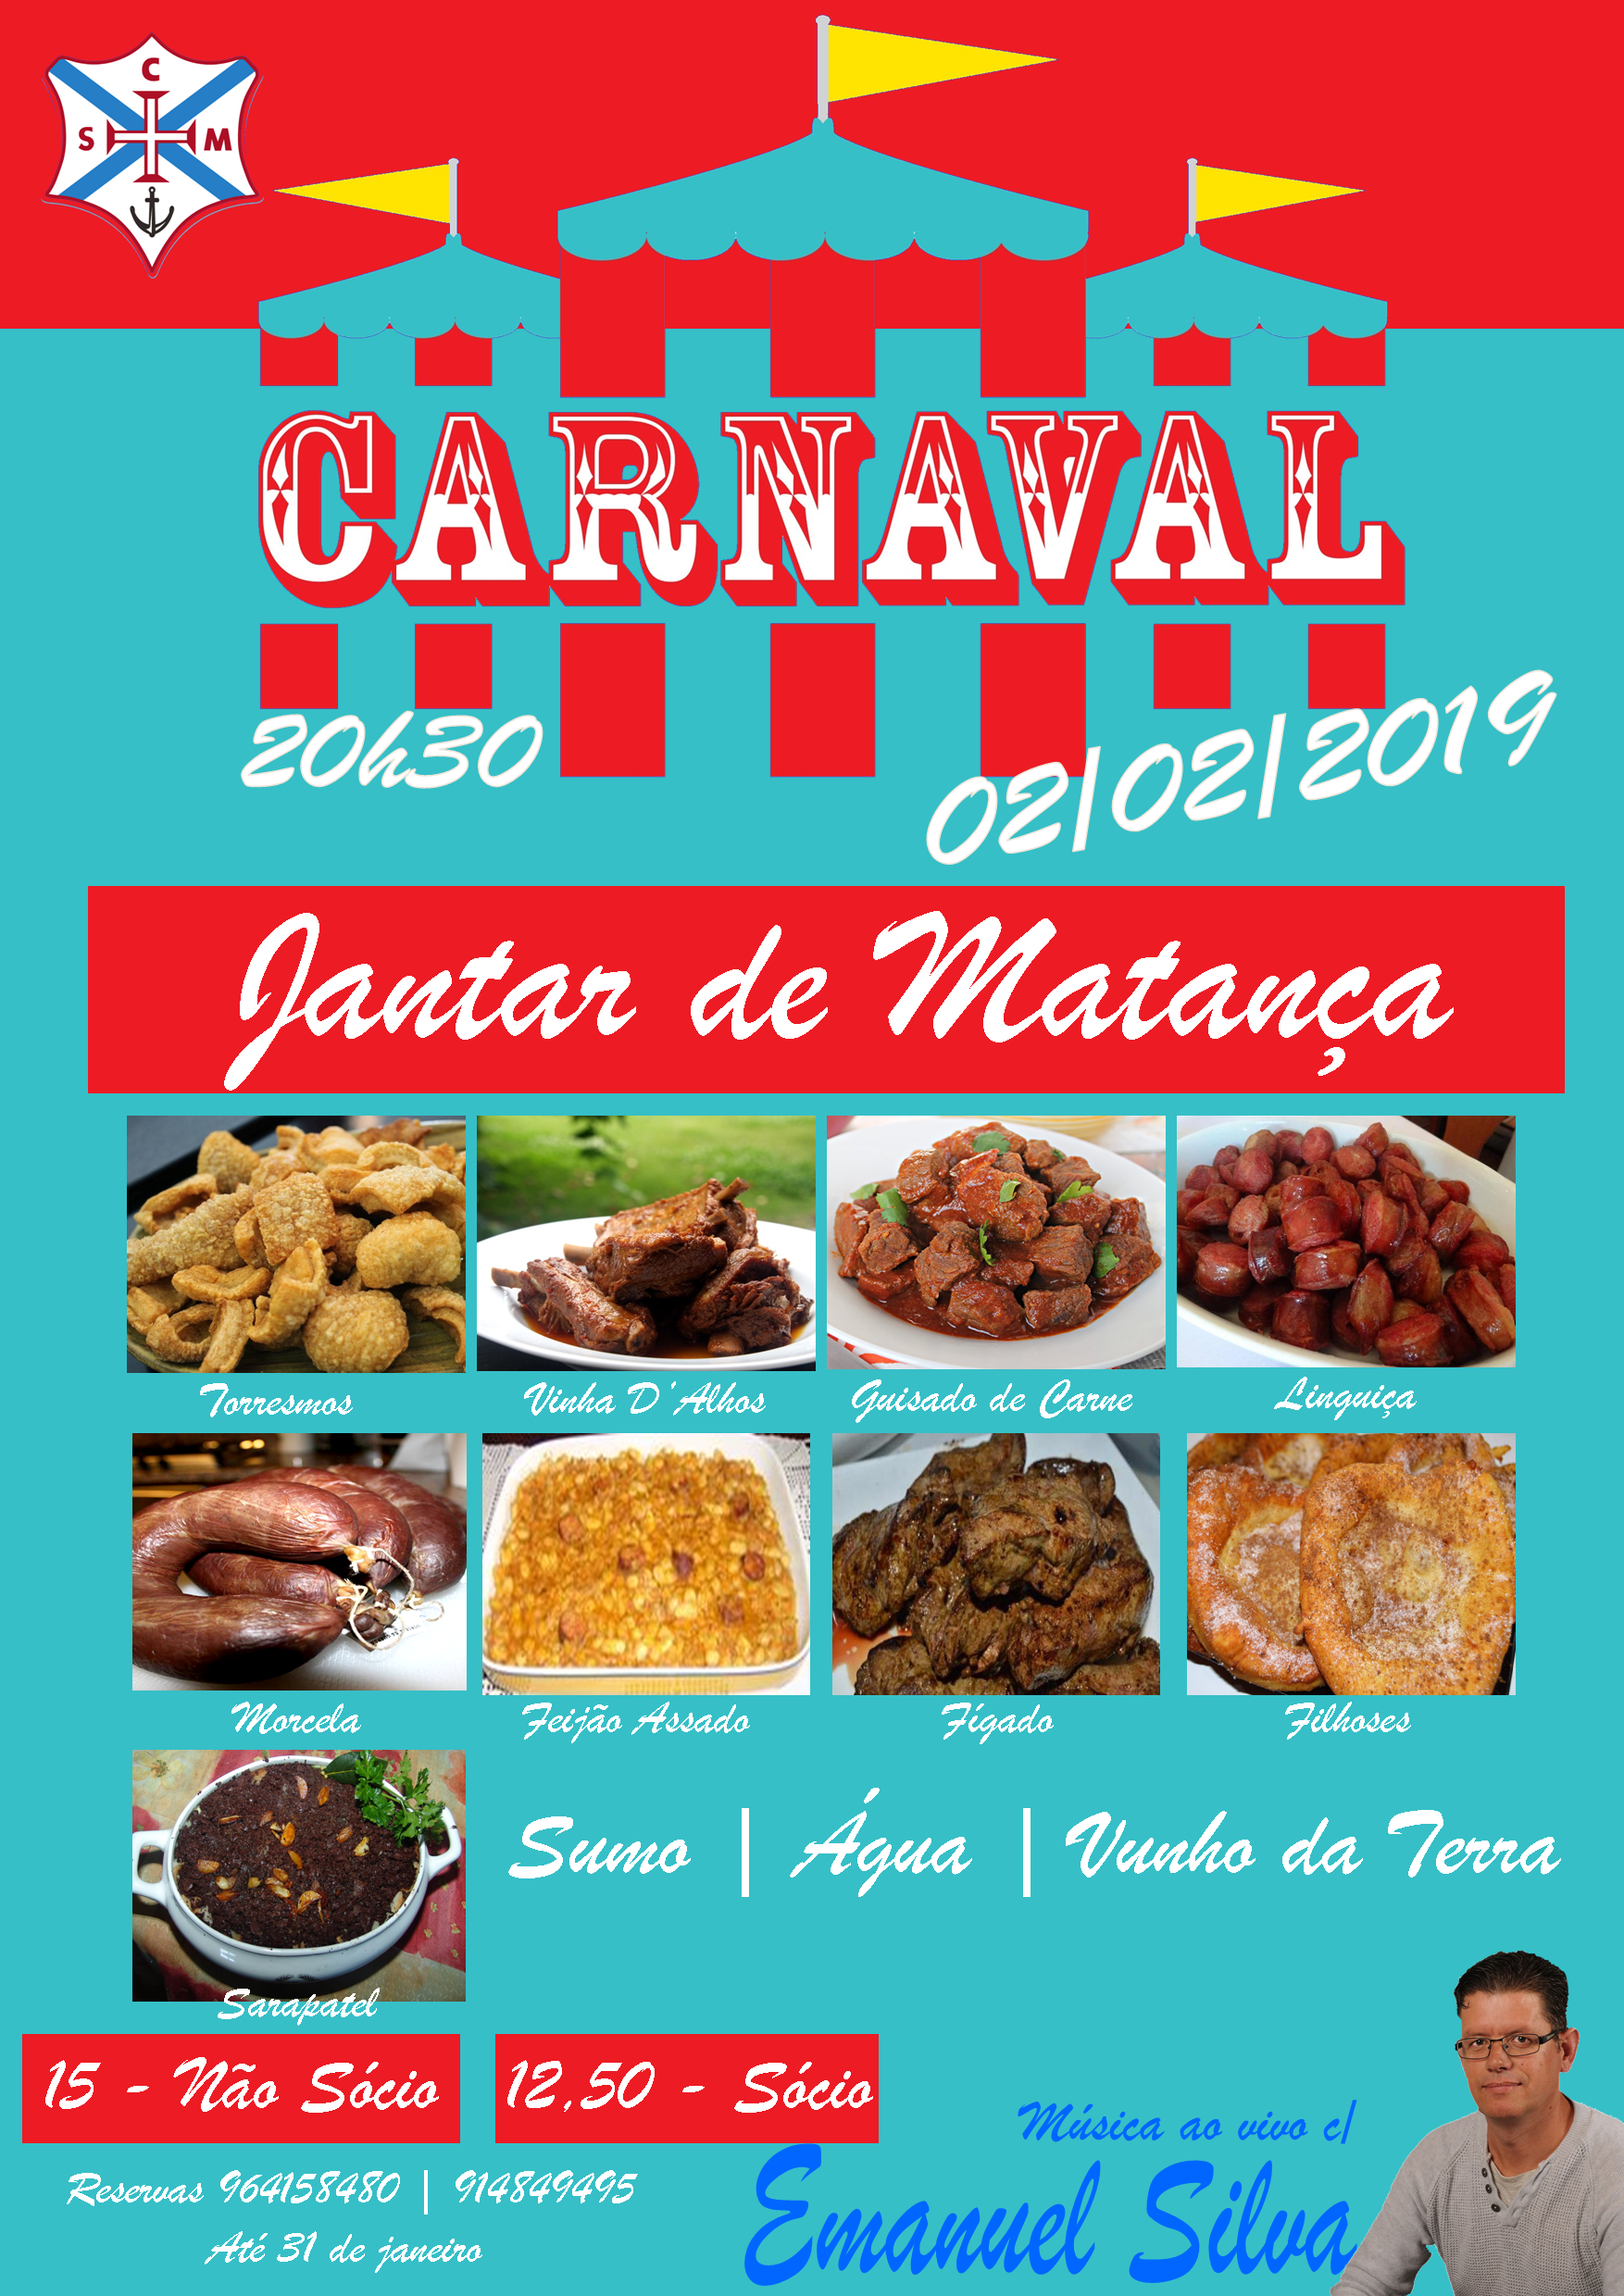 Carnaval no Marítimo - CARTAZ